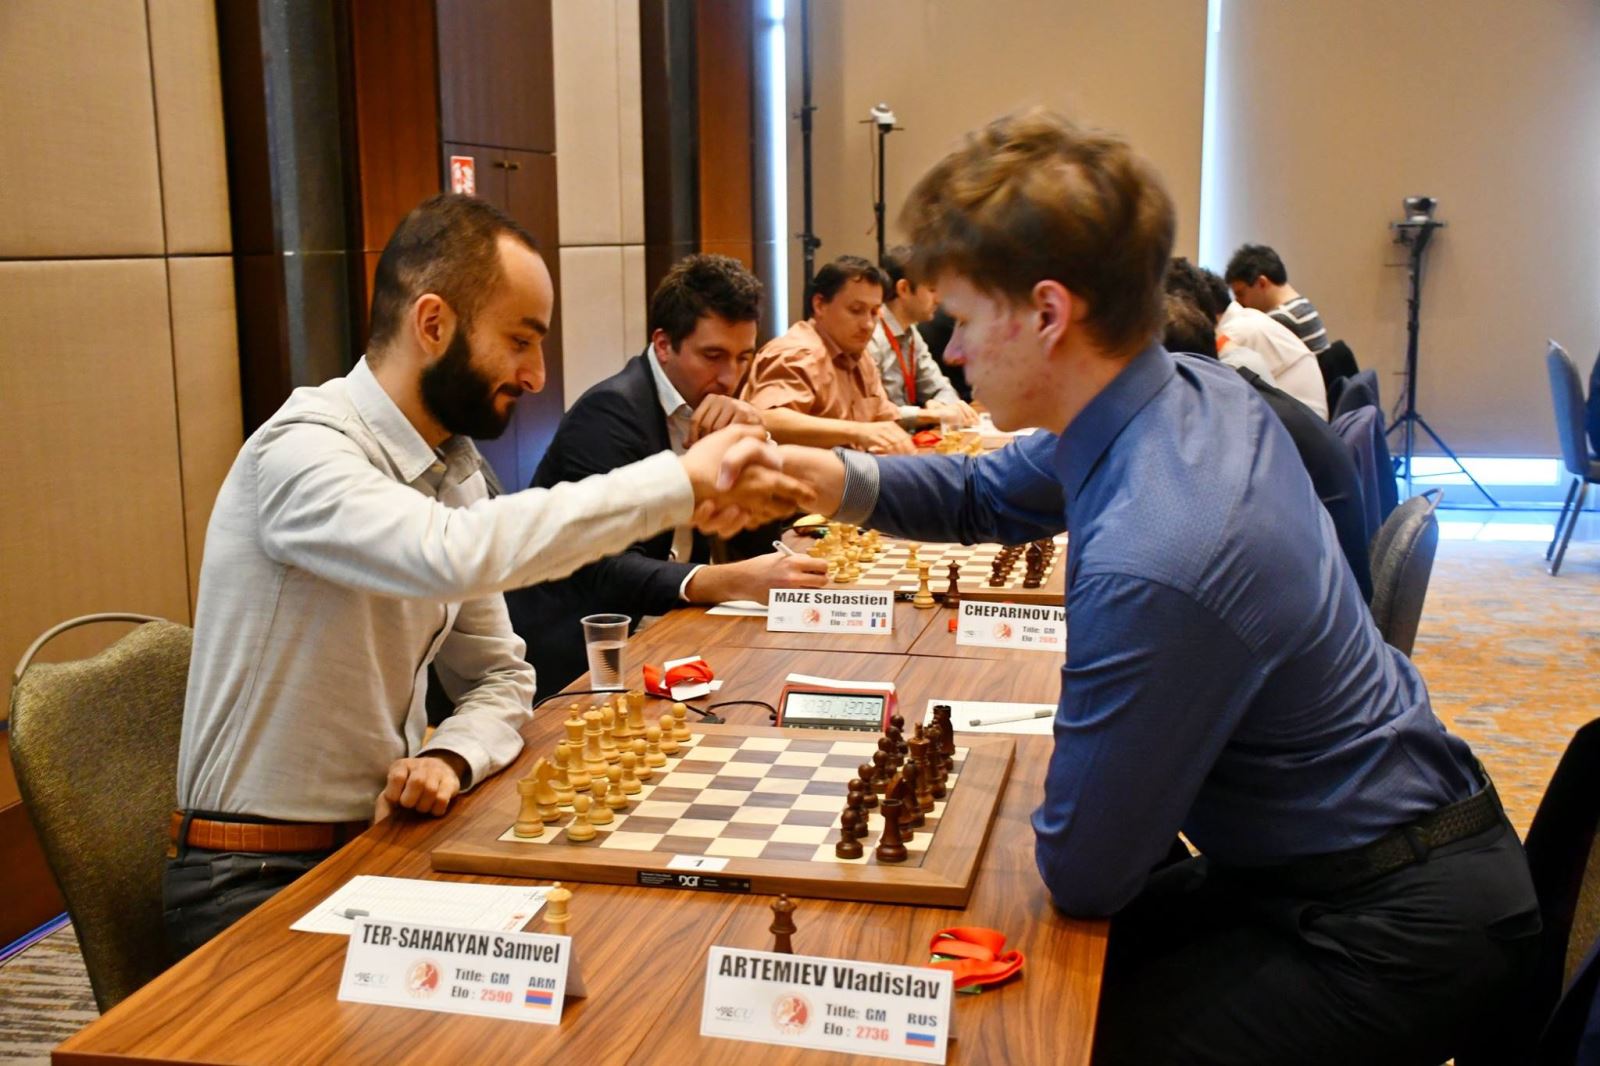 Ter-Sahakyan vs Artemiev